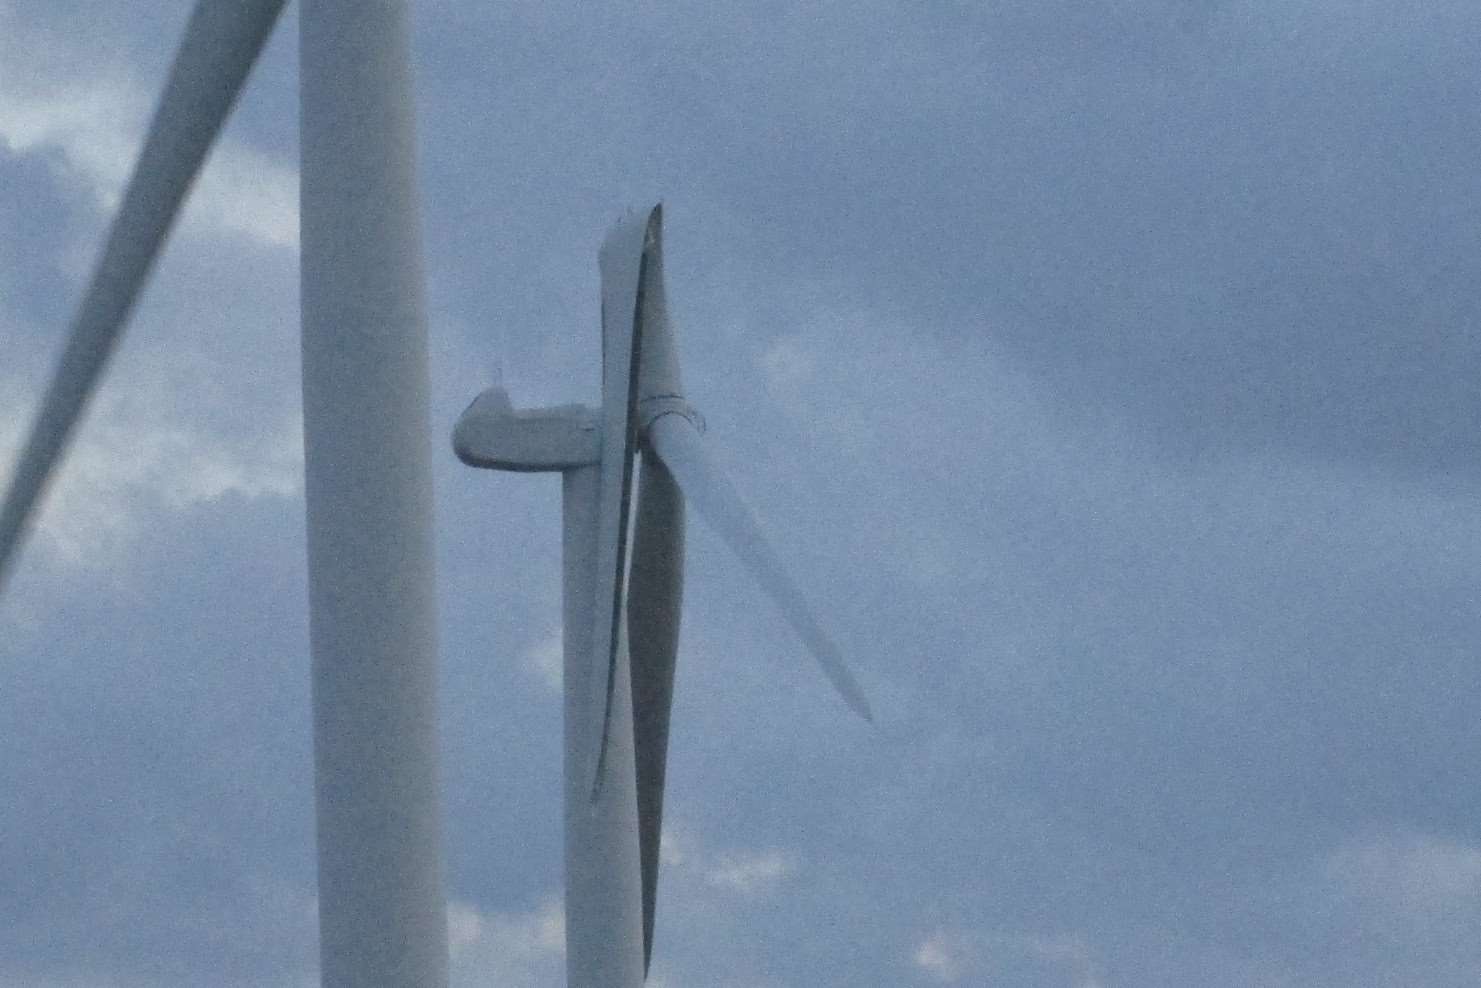 The wind turbine blade has bent back